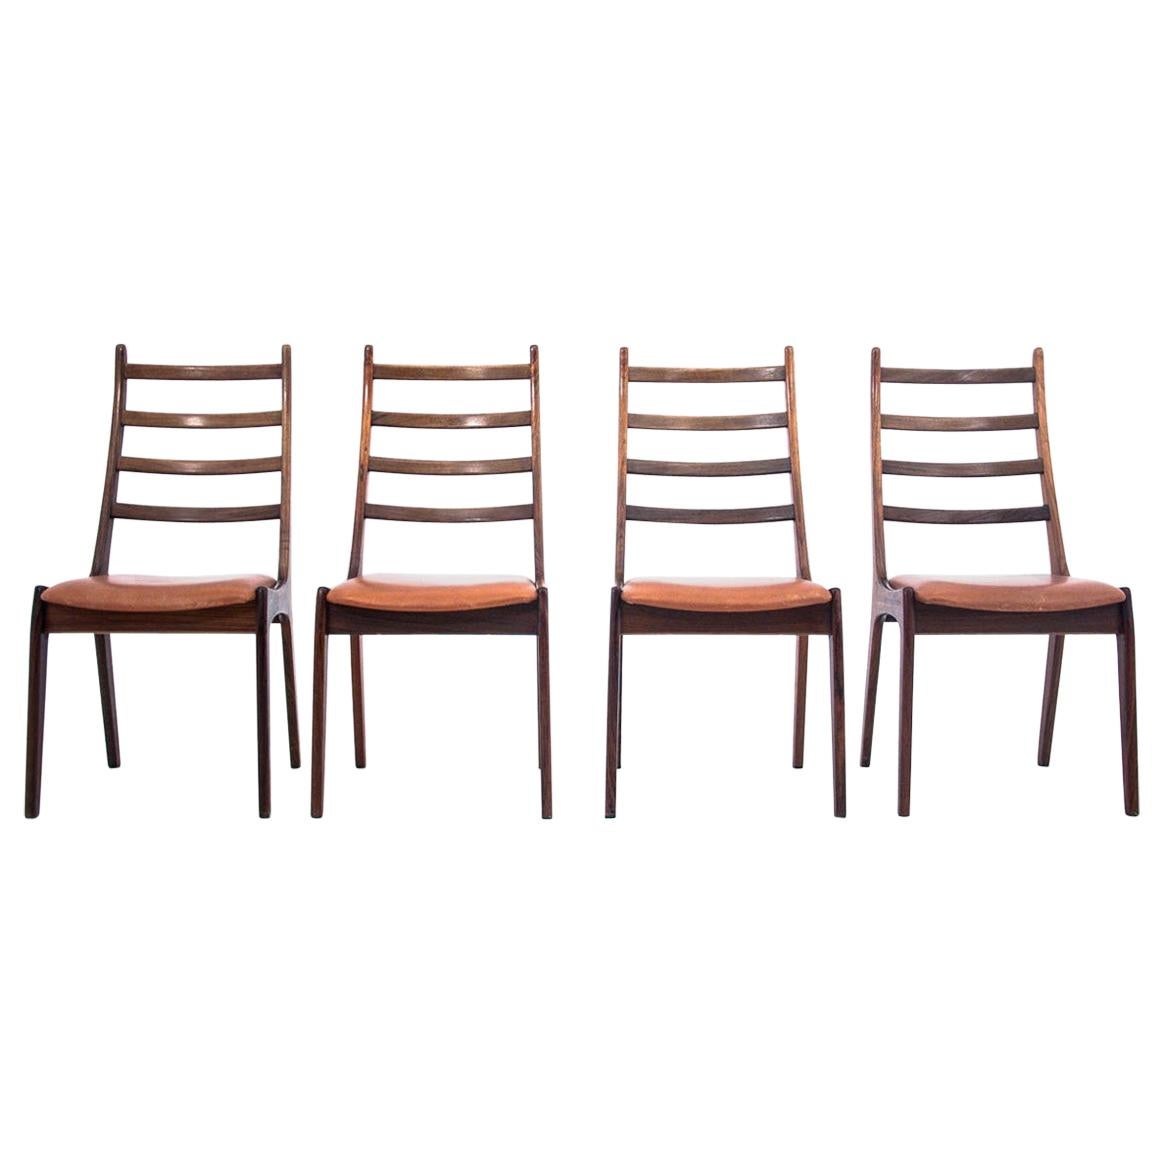 Set of 4 Rosewood Chairs, Danish Design, 1960s